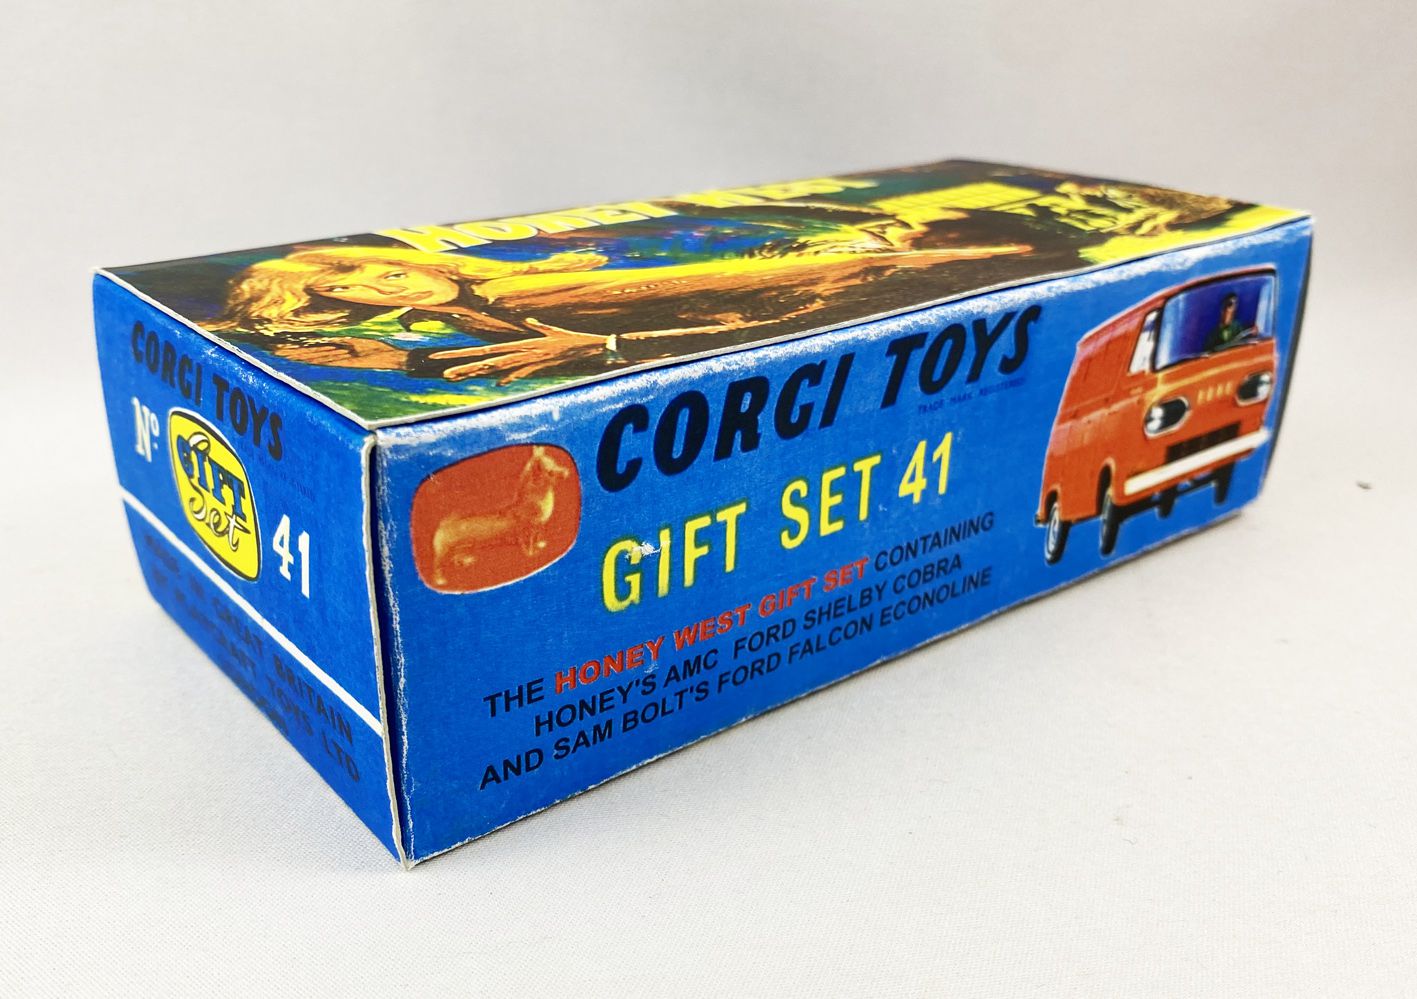 Honey West - Corgi Toys Gift Set 41 (Culfi Toy Soldiers) - Honey's AMC Ford  Shelby Cobra 